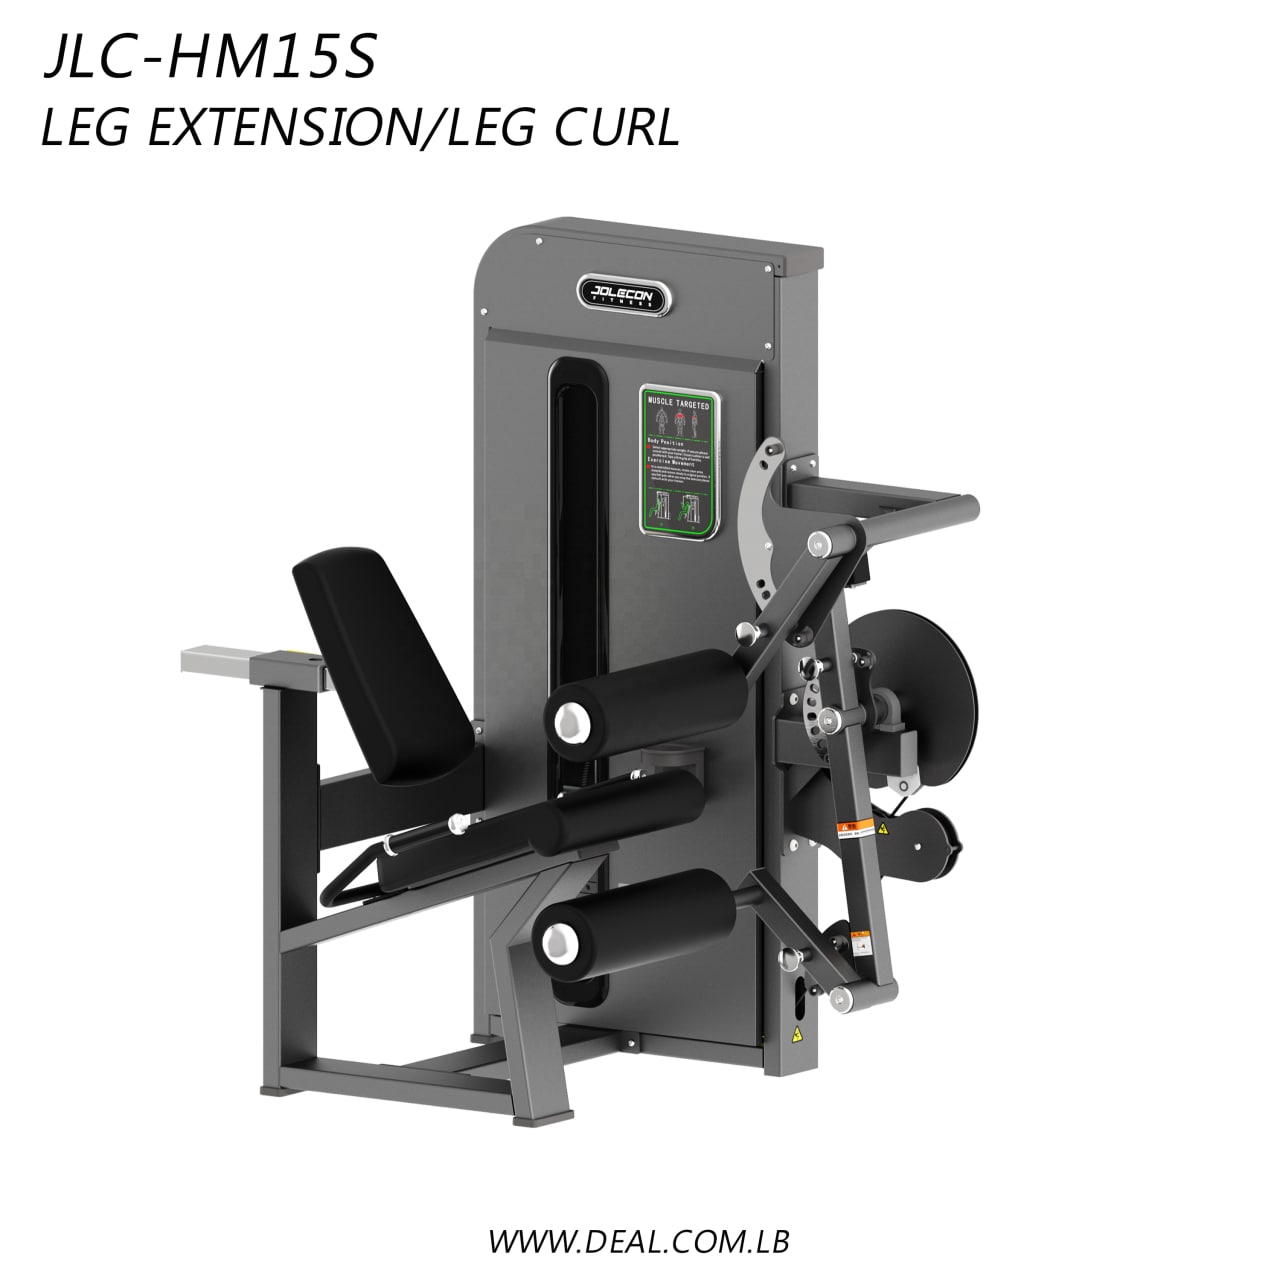 JLC-HM15S+%7C+Leg+Extension+Leg+Curl